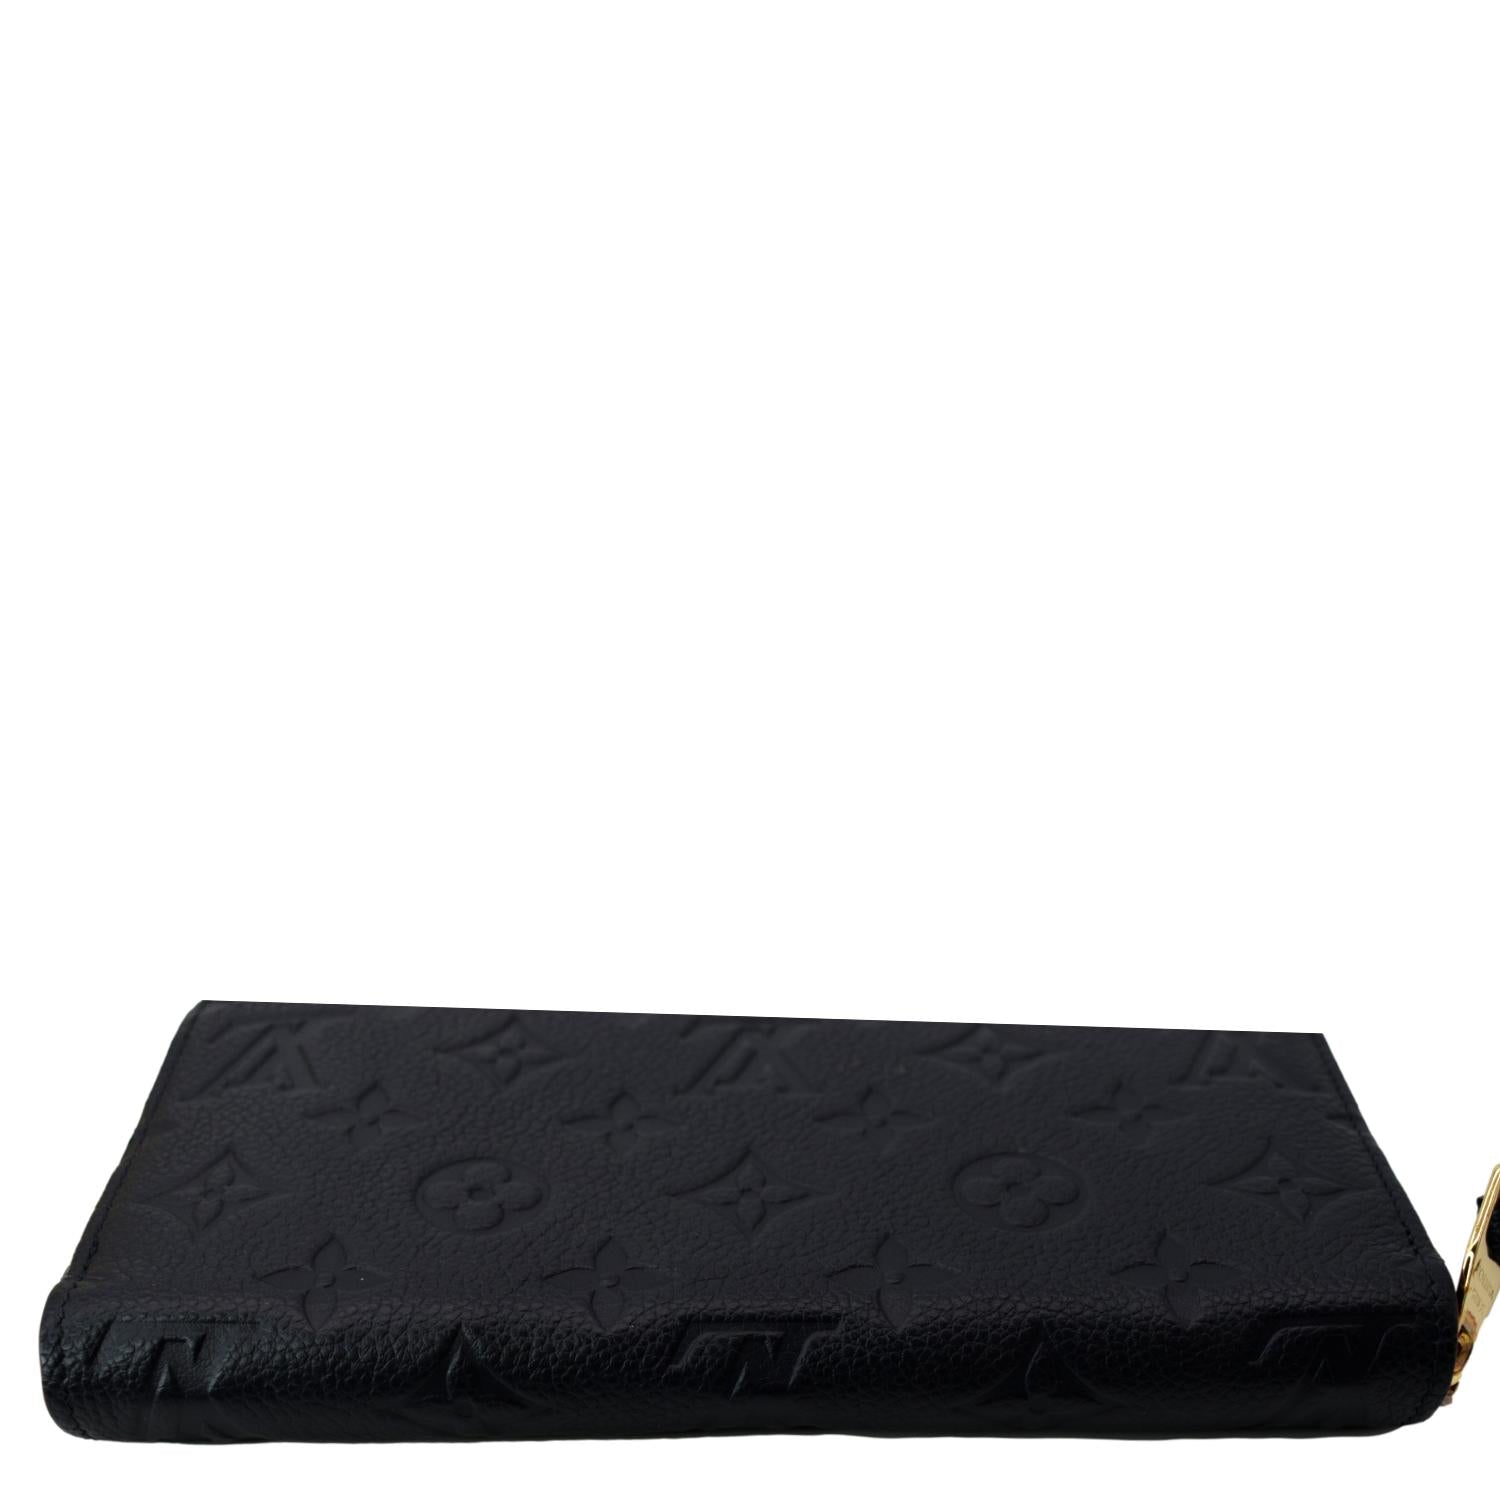 Red Louis Vuitton Monogram Empreinte Zippy Wallet – Designer Revival